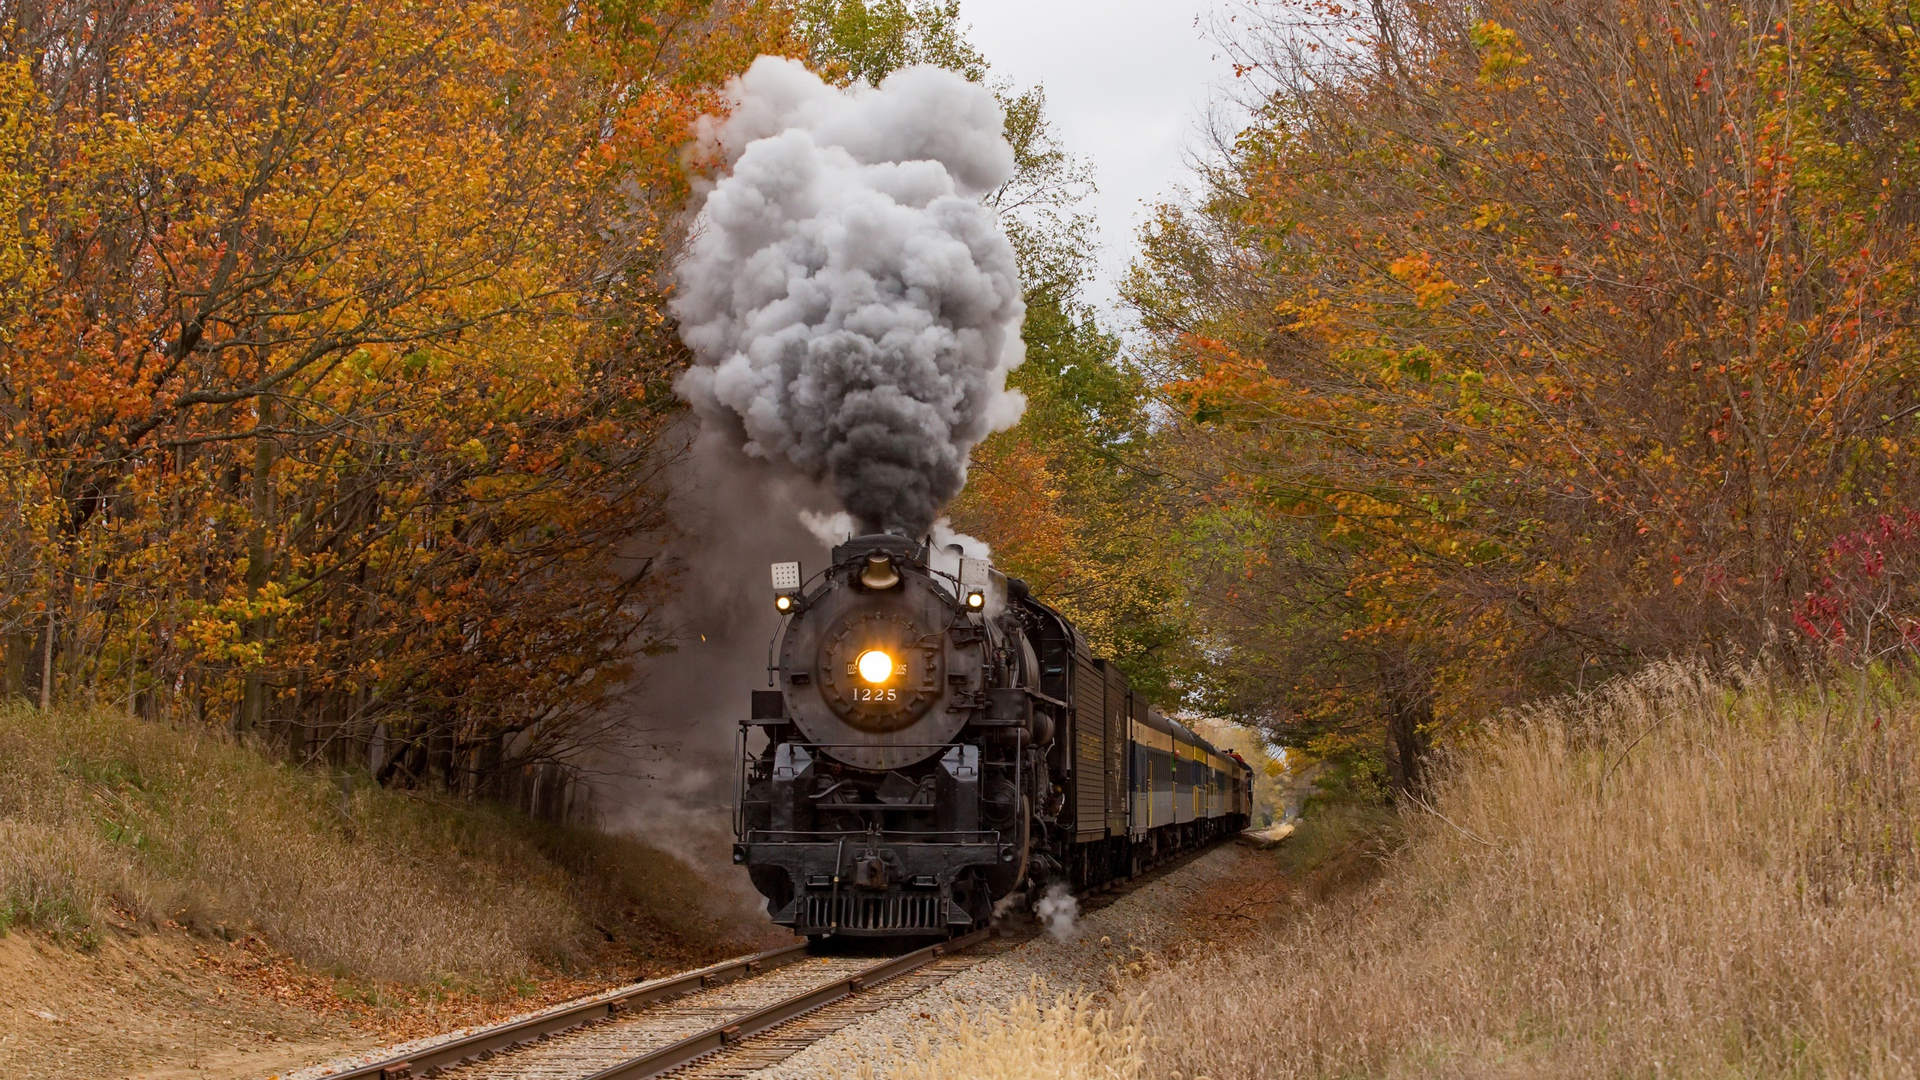 Download Locomotive, Old, Train, Forest, Autumn Wallpaper in 1920x1080 Resolution